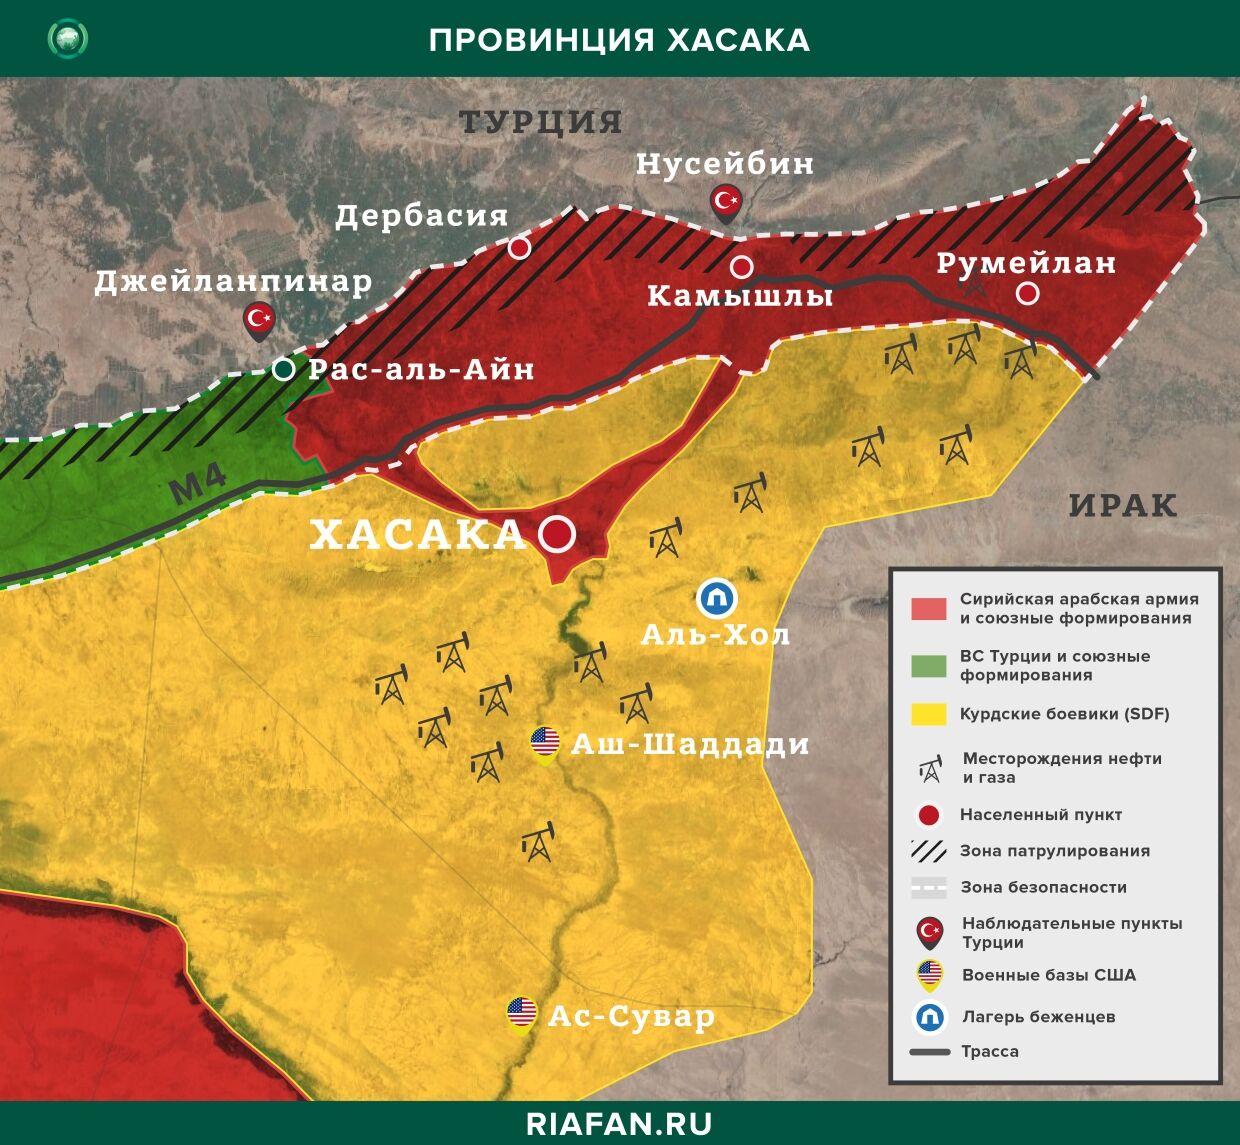 Nouvelles de Syrie 22 Peut 22.30: при теракте в Даръа пострадали два человека, в Хасаке ликвидированы 10 курдских боевиков